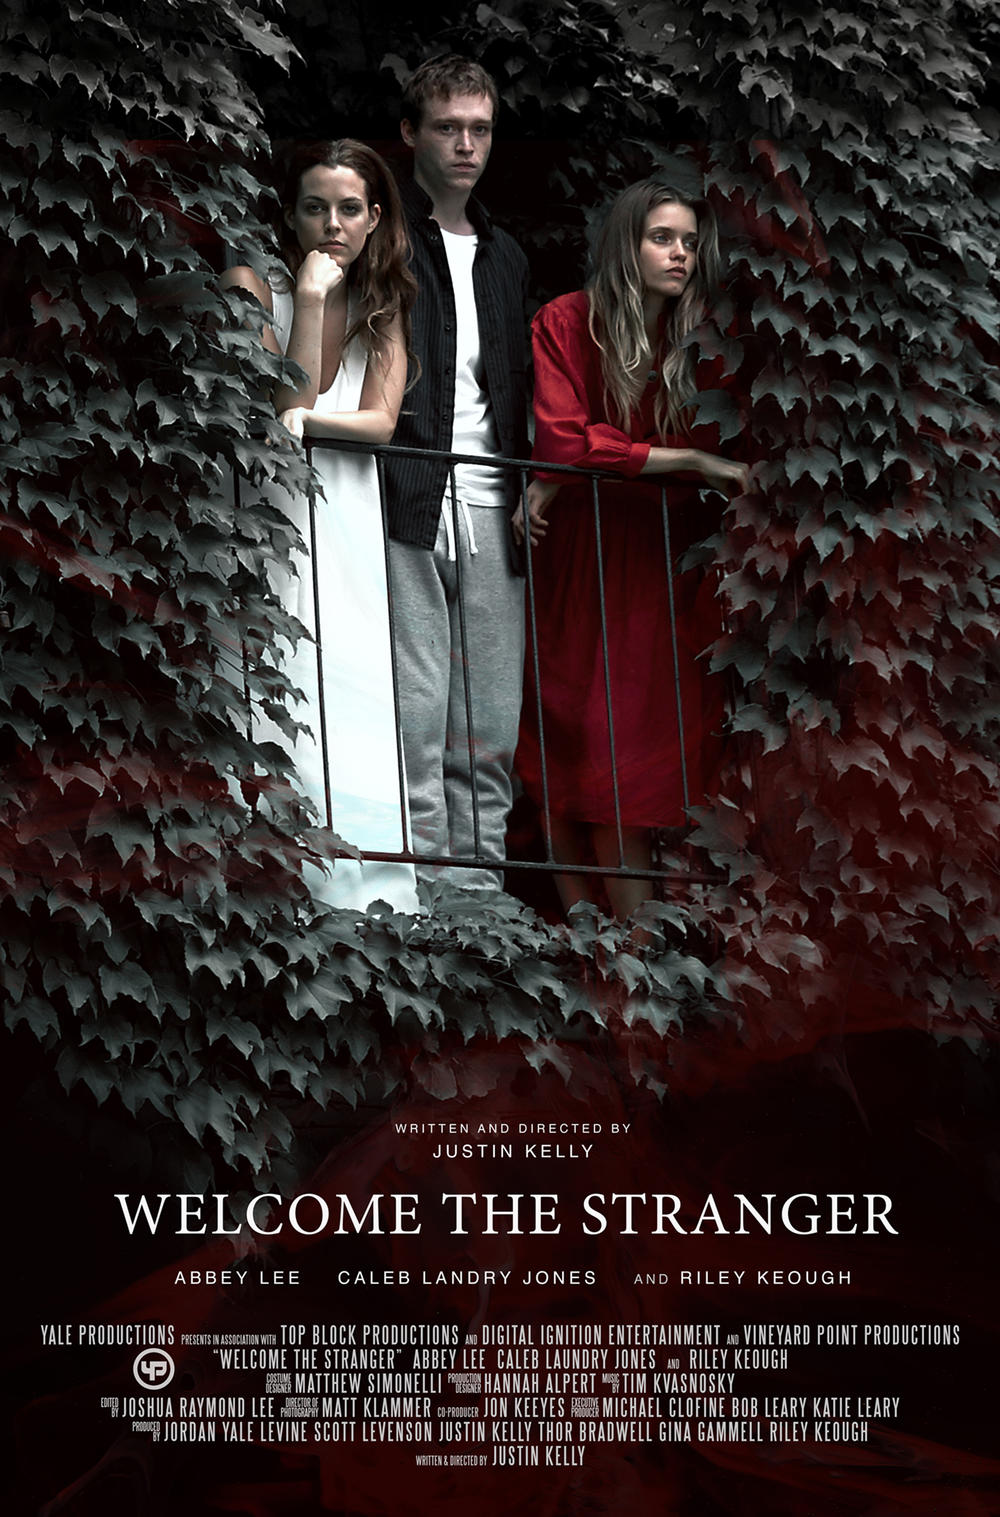 Nonton film Welcome the Stranger layarkaca21 indoxx1 ganool online streaming terbaru